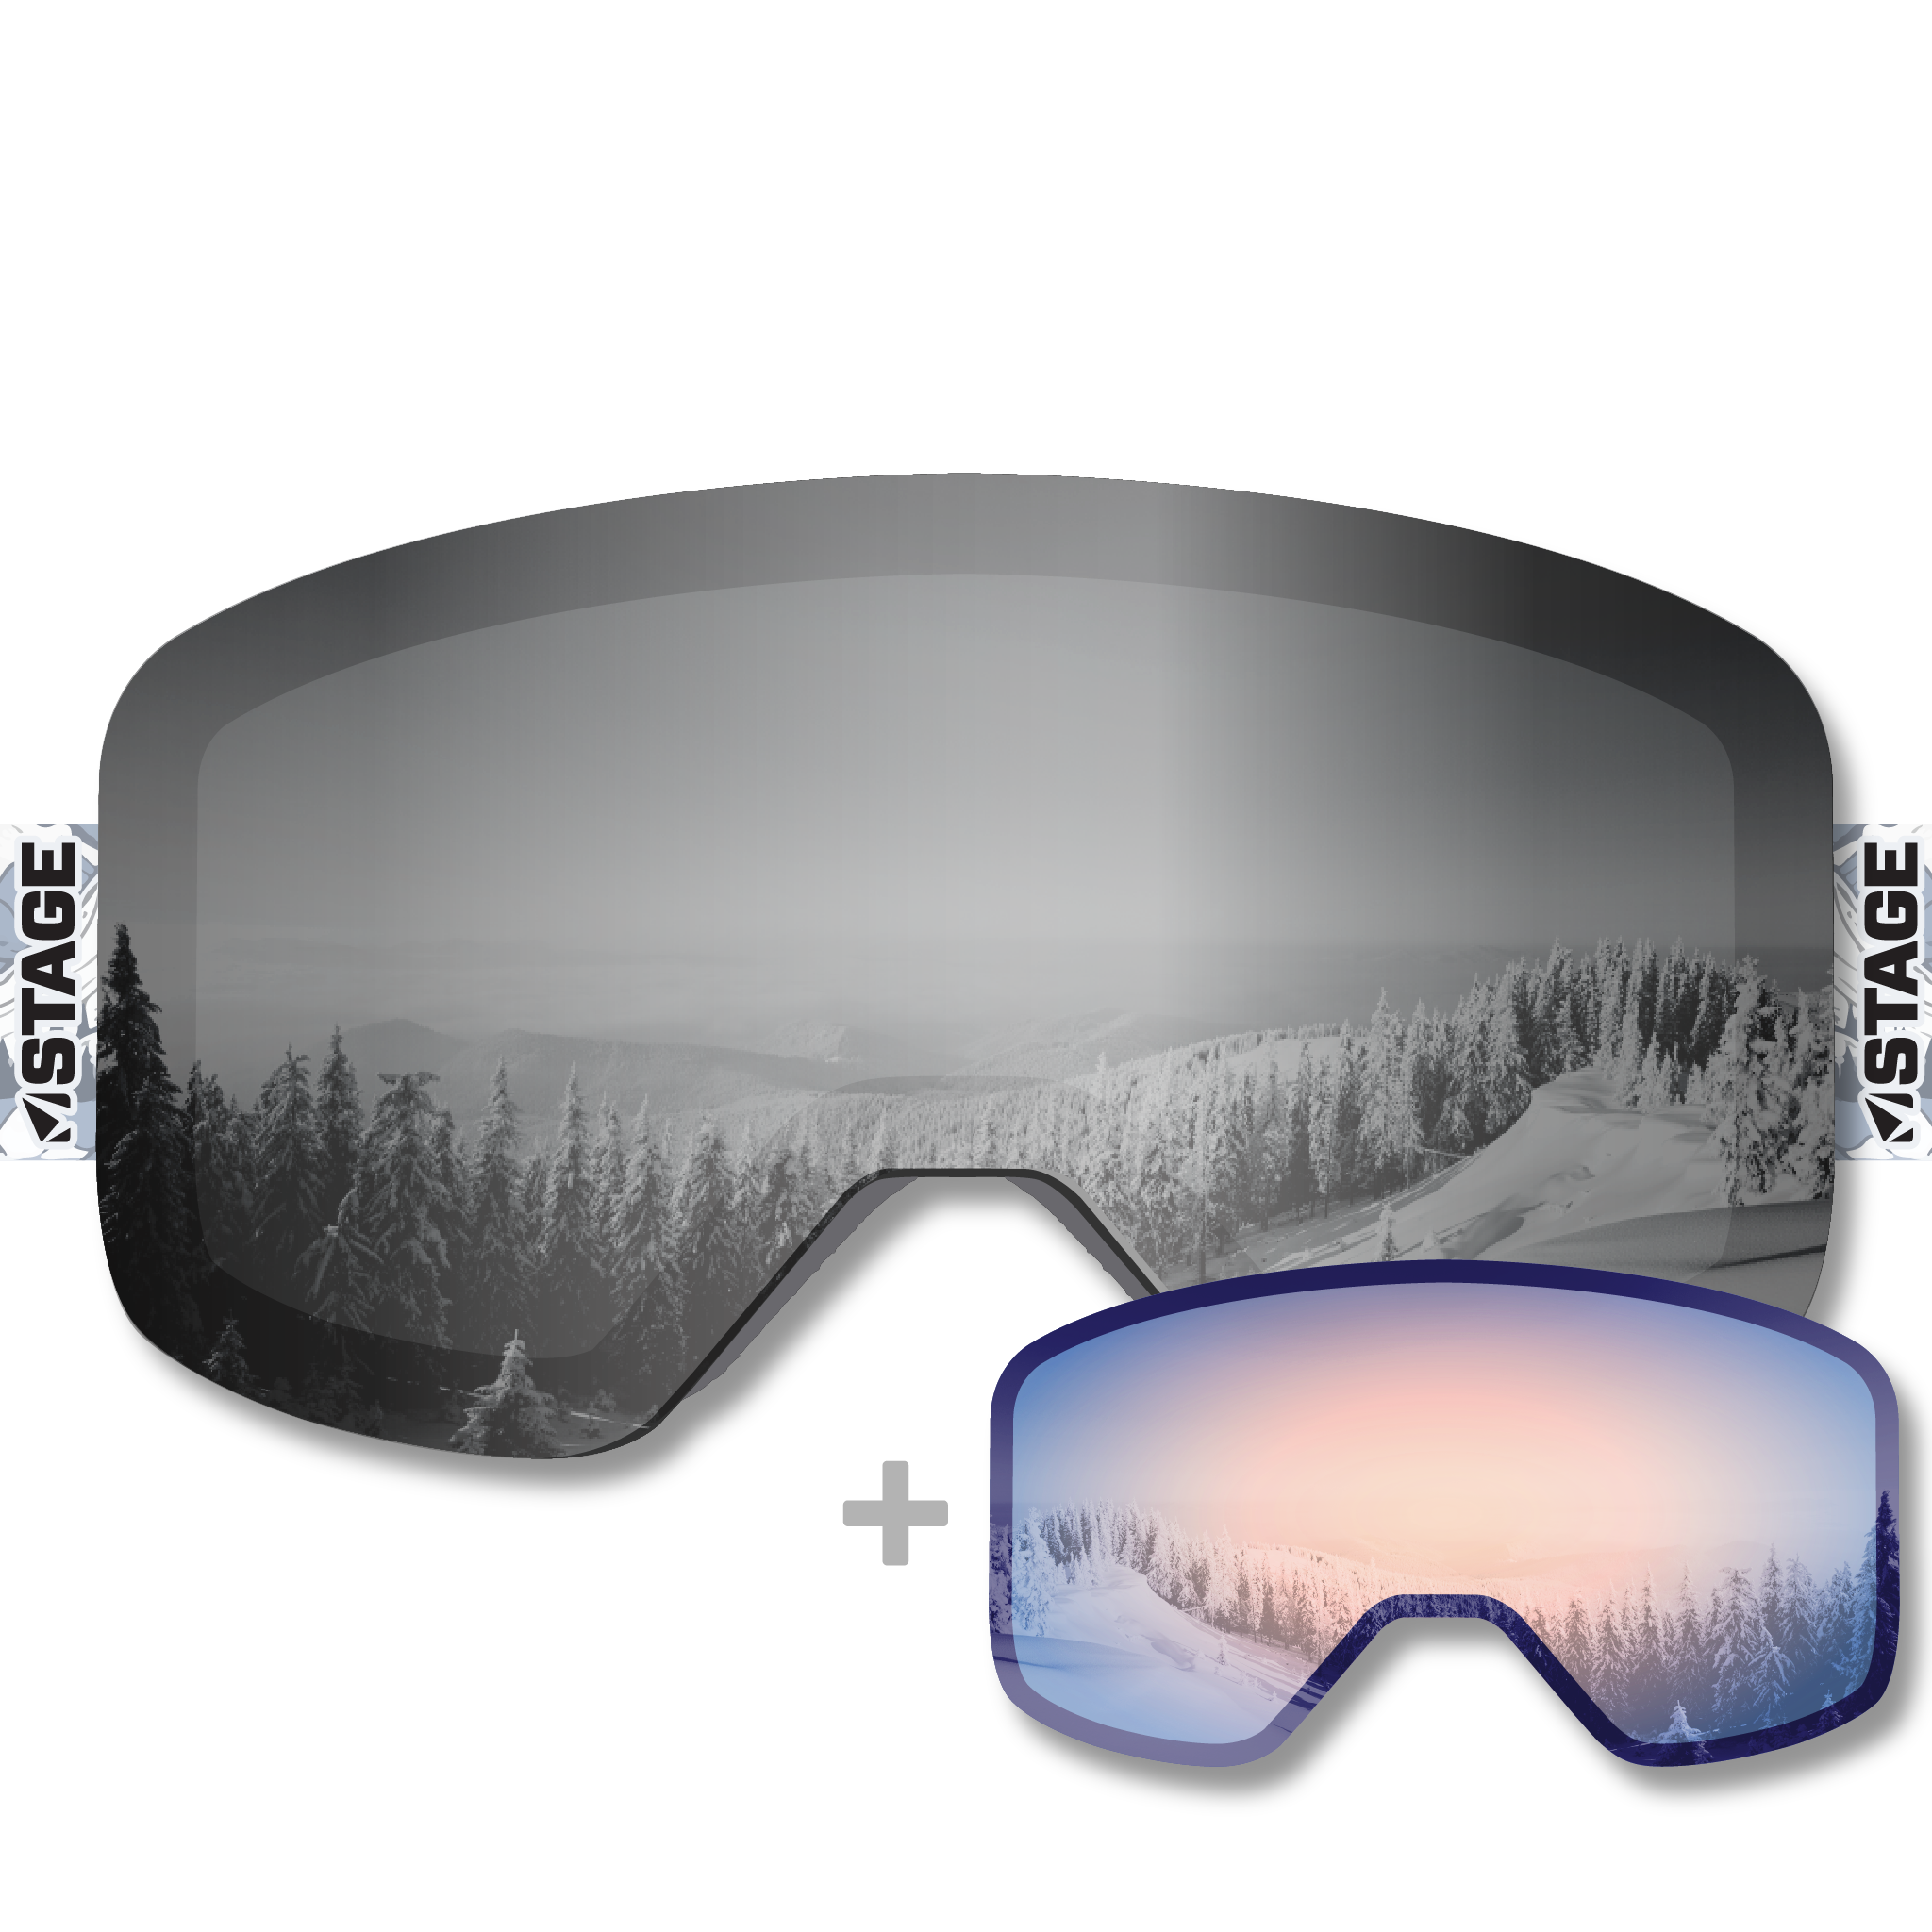 Wasatch Adaptive Sports Propnetic - Magnetic Ski Goggle + Bonus Lens